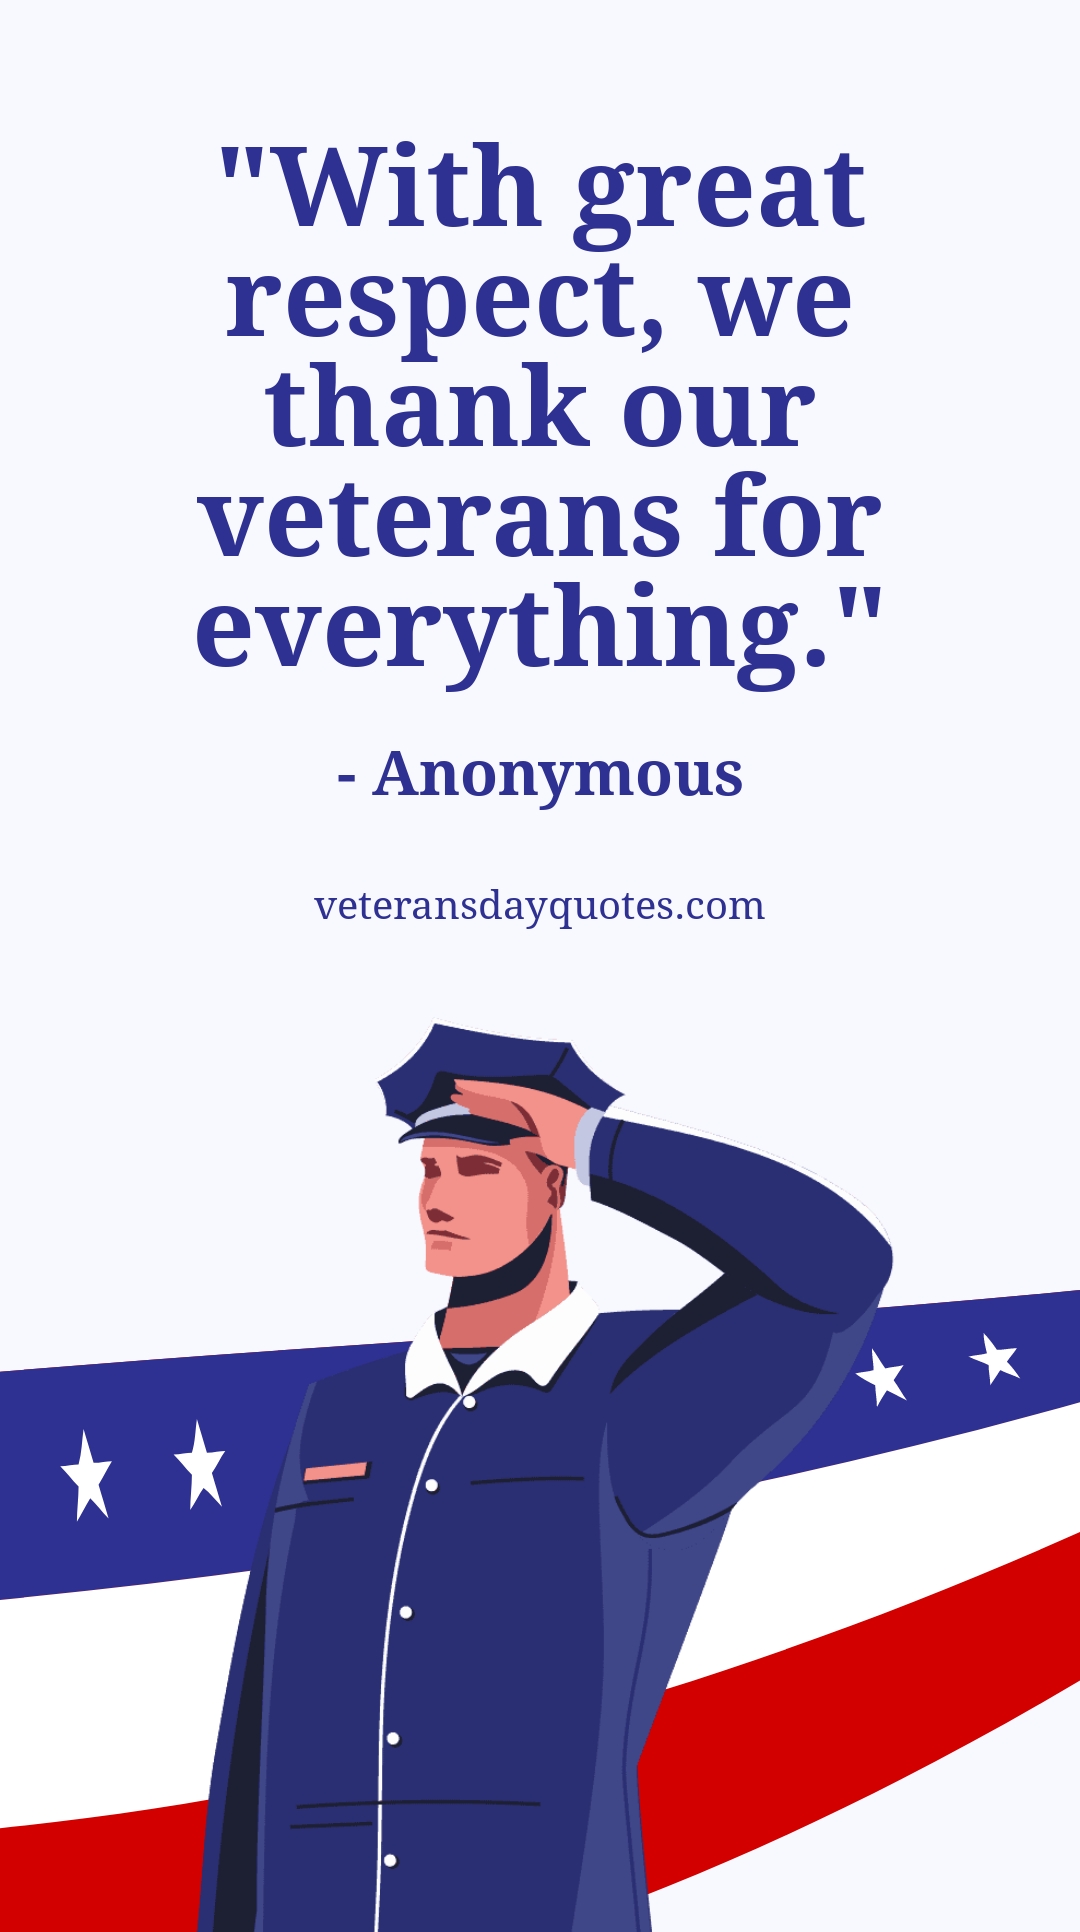 Veterans Day Quote WhatsApp Post